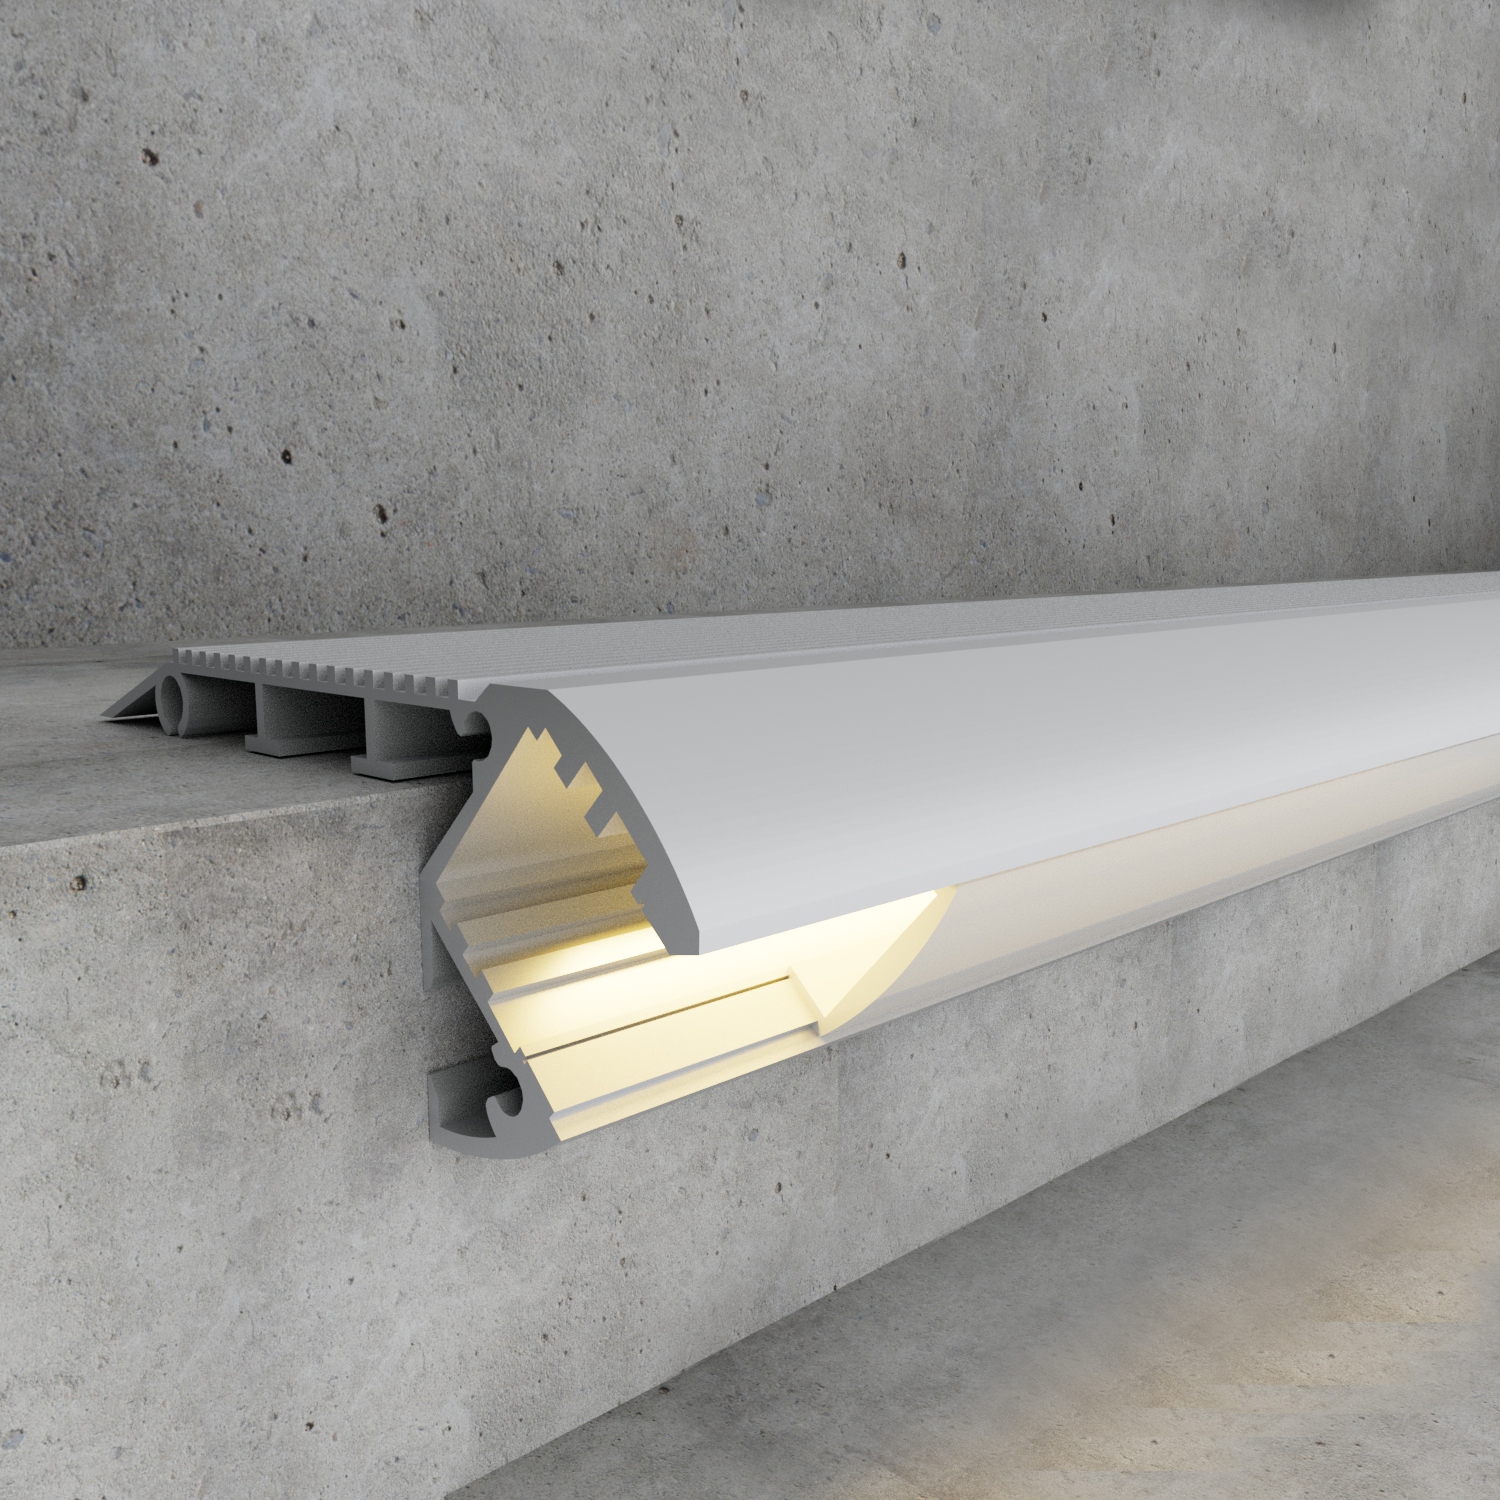 Perfil de Aluminio Especial Escadas 12/24V 2 Metros - Dsc